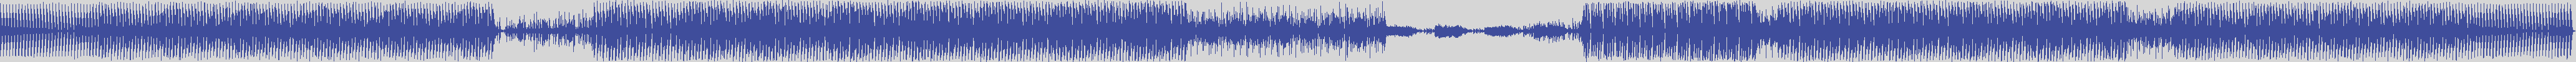 atomic_recordings [AR020] Althoff, Amadori - Genoma [Original Mix] audio wave form